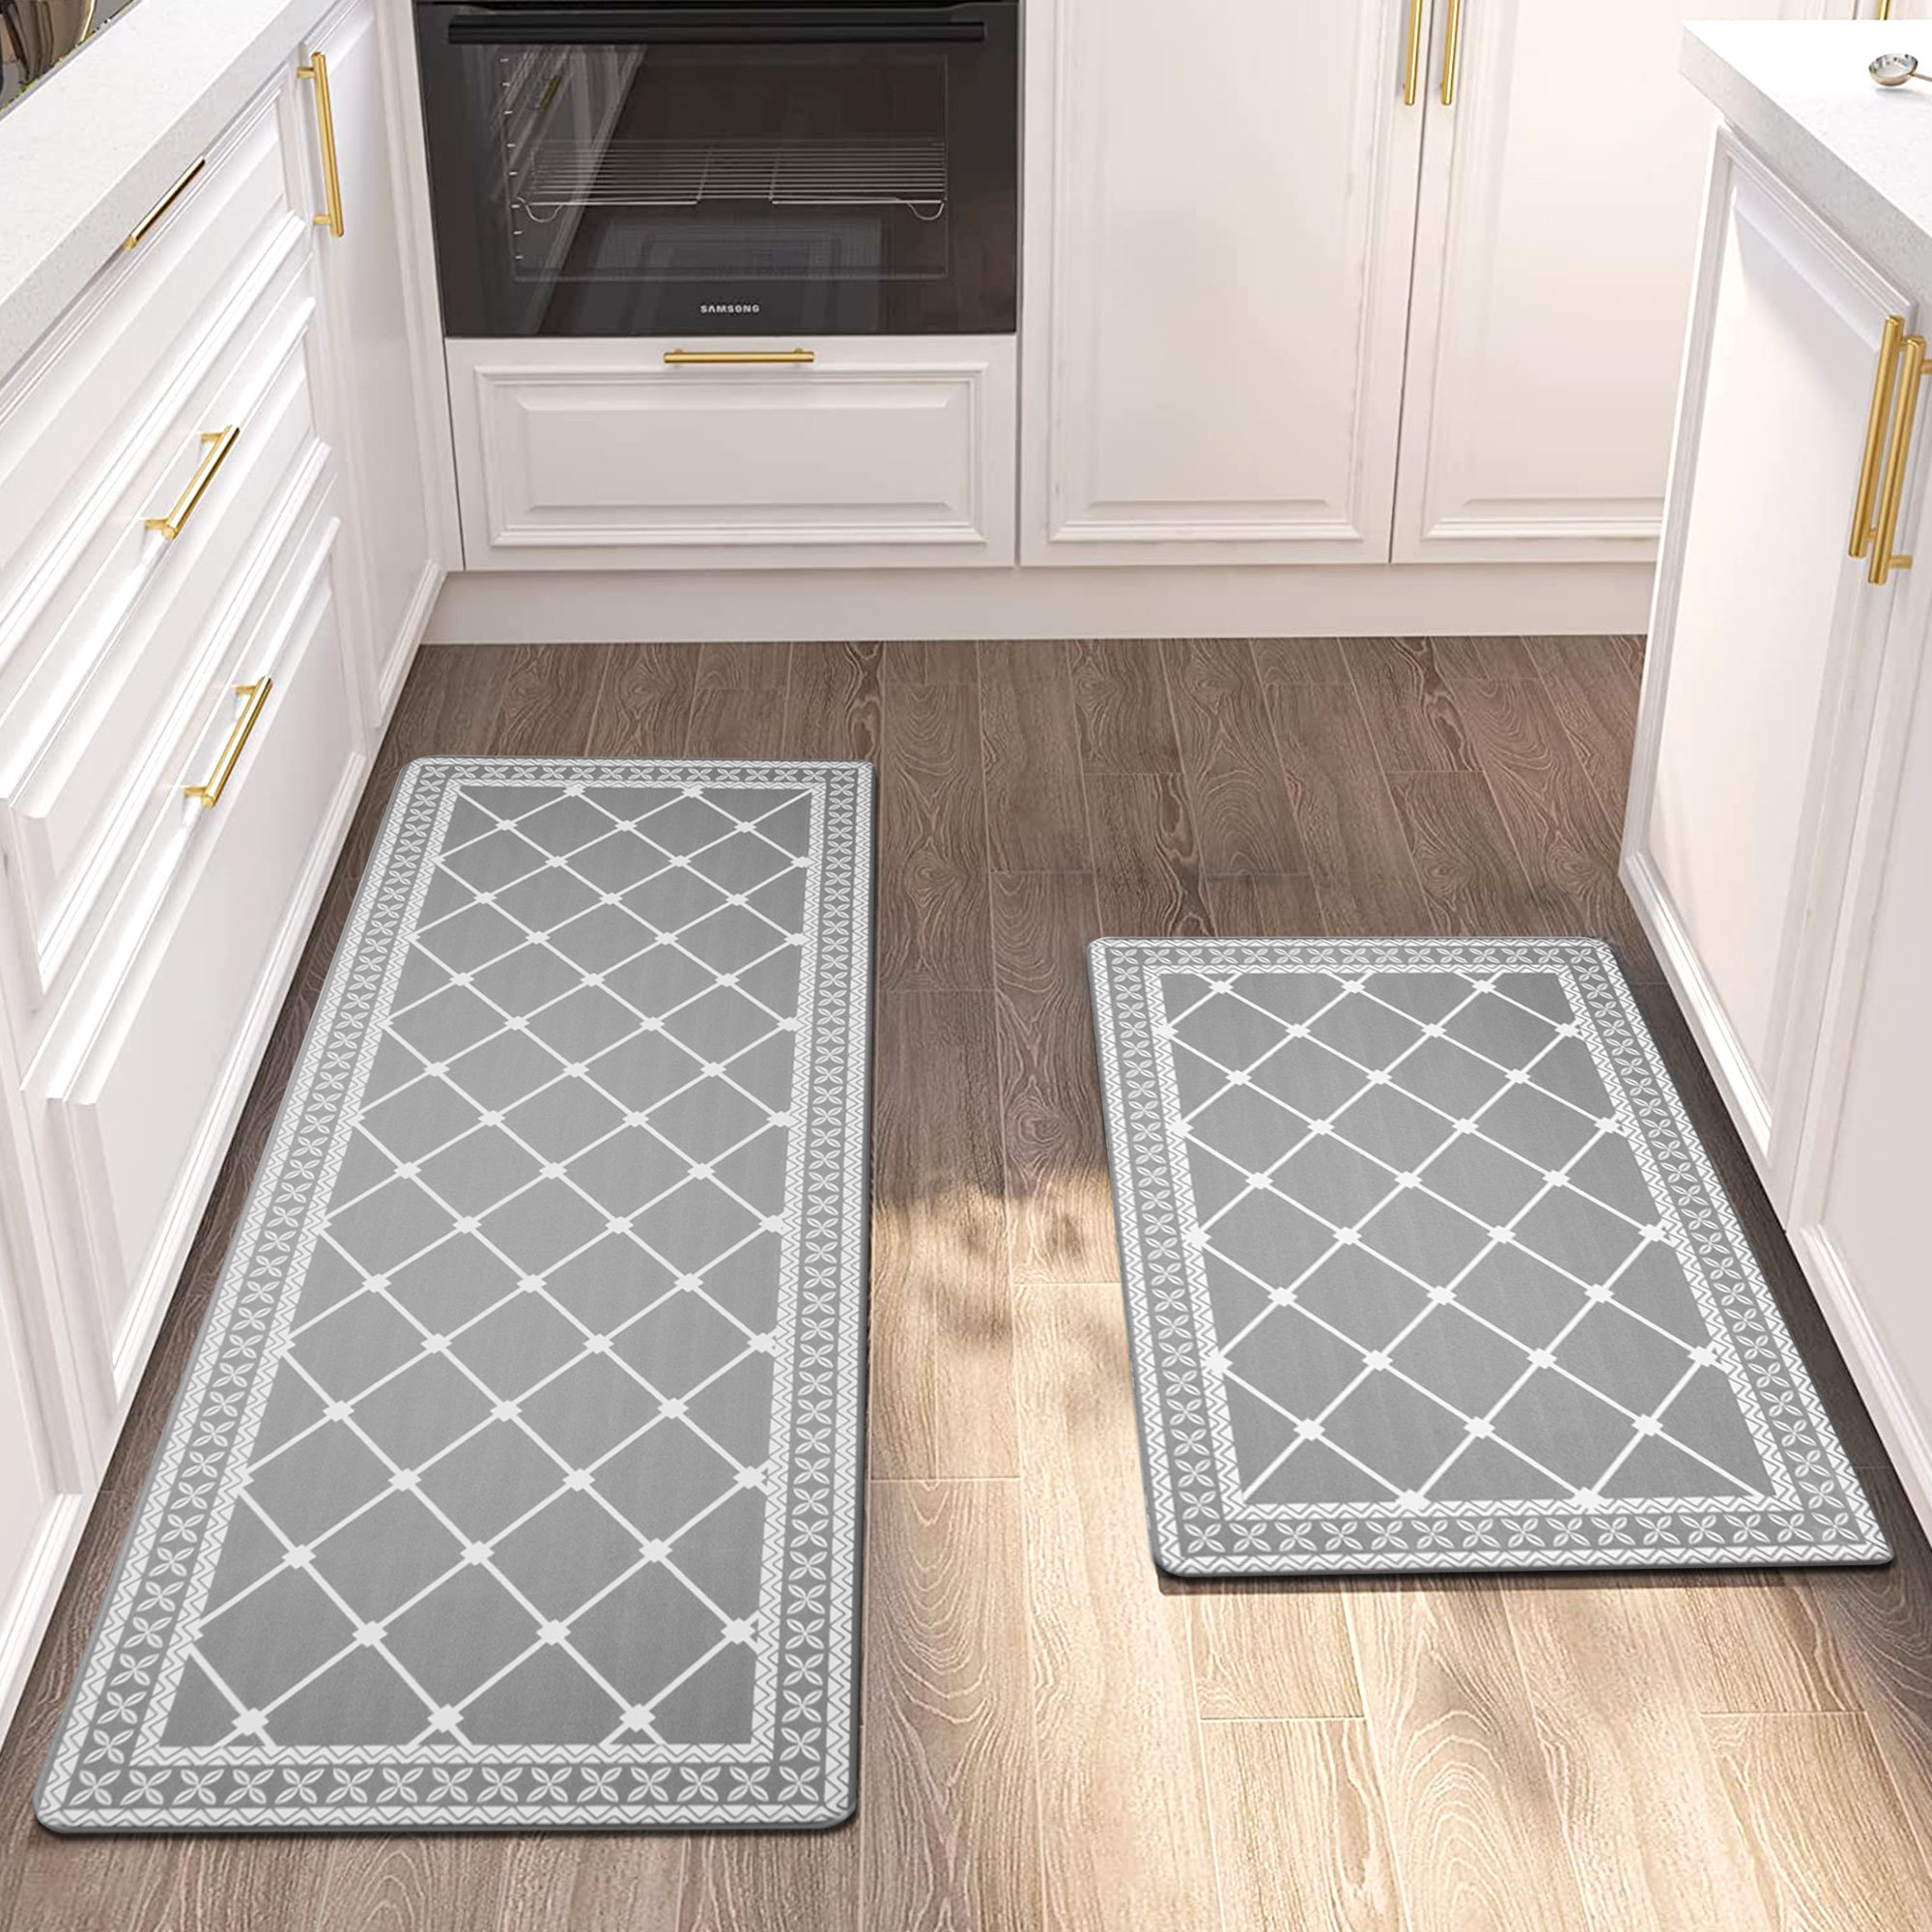 Rubber Door Mats Anti-Fatigue Floor Mat for Kitchen New Bar Floor Mats